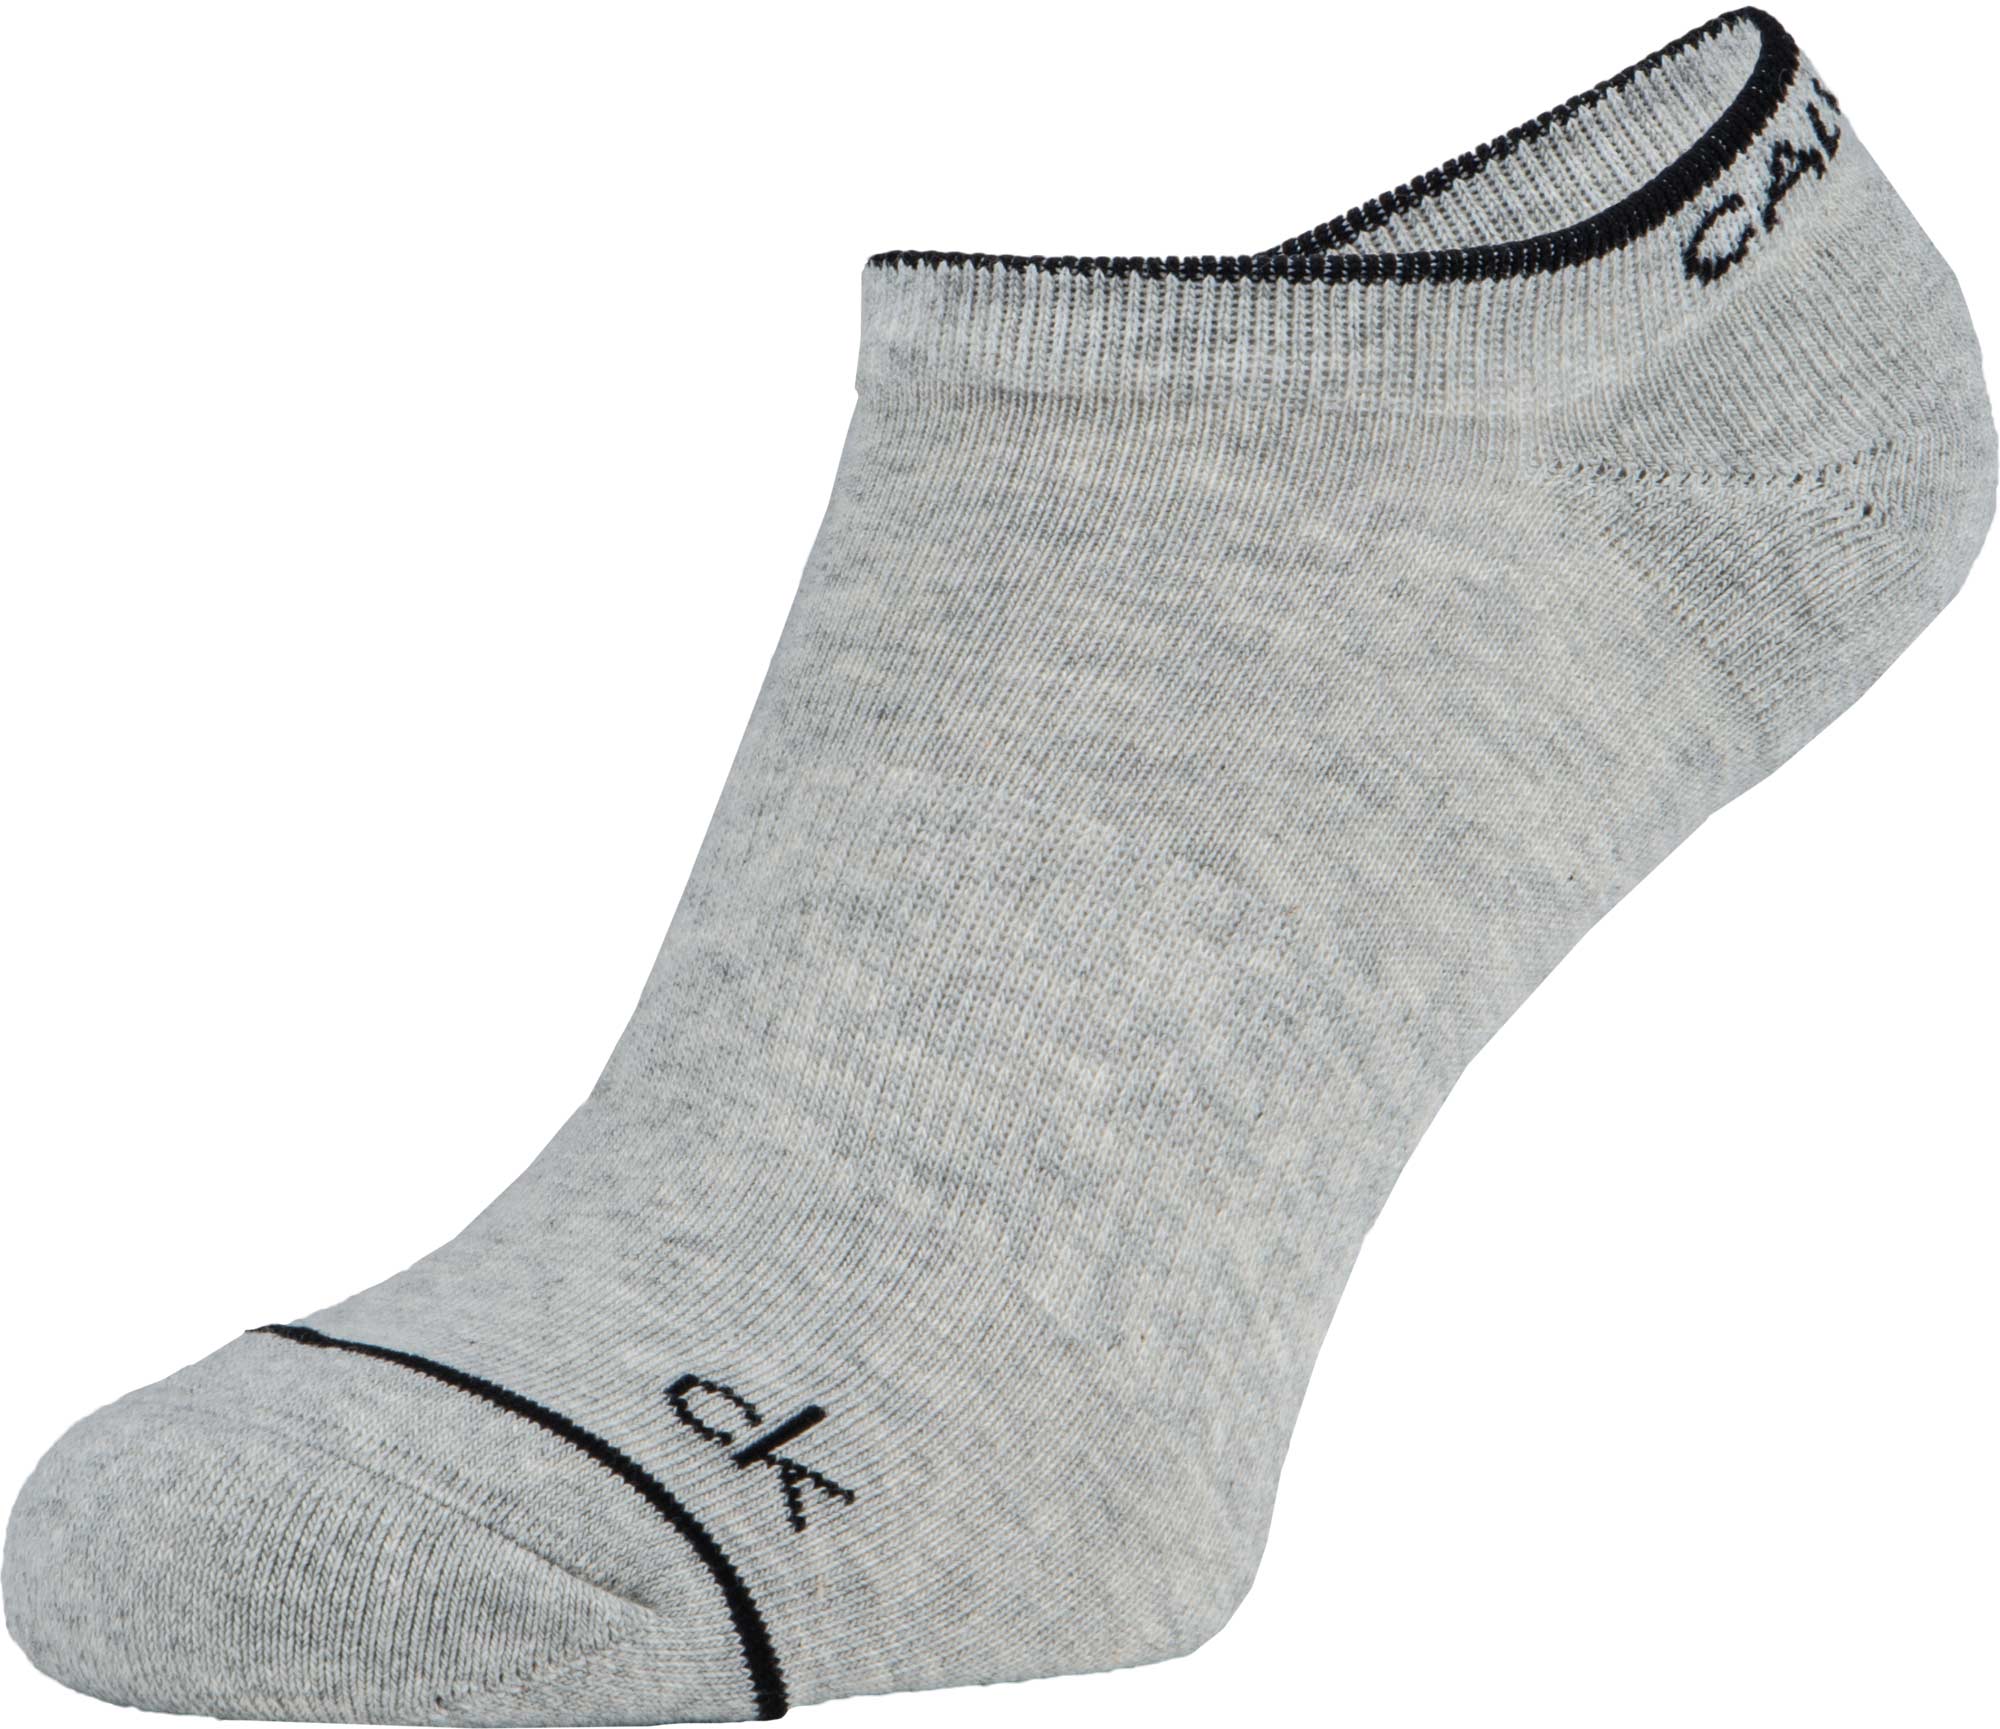 Women's socks